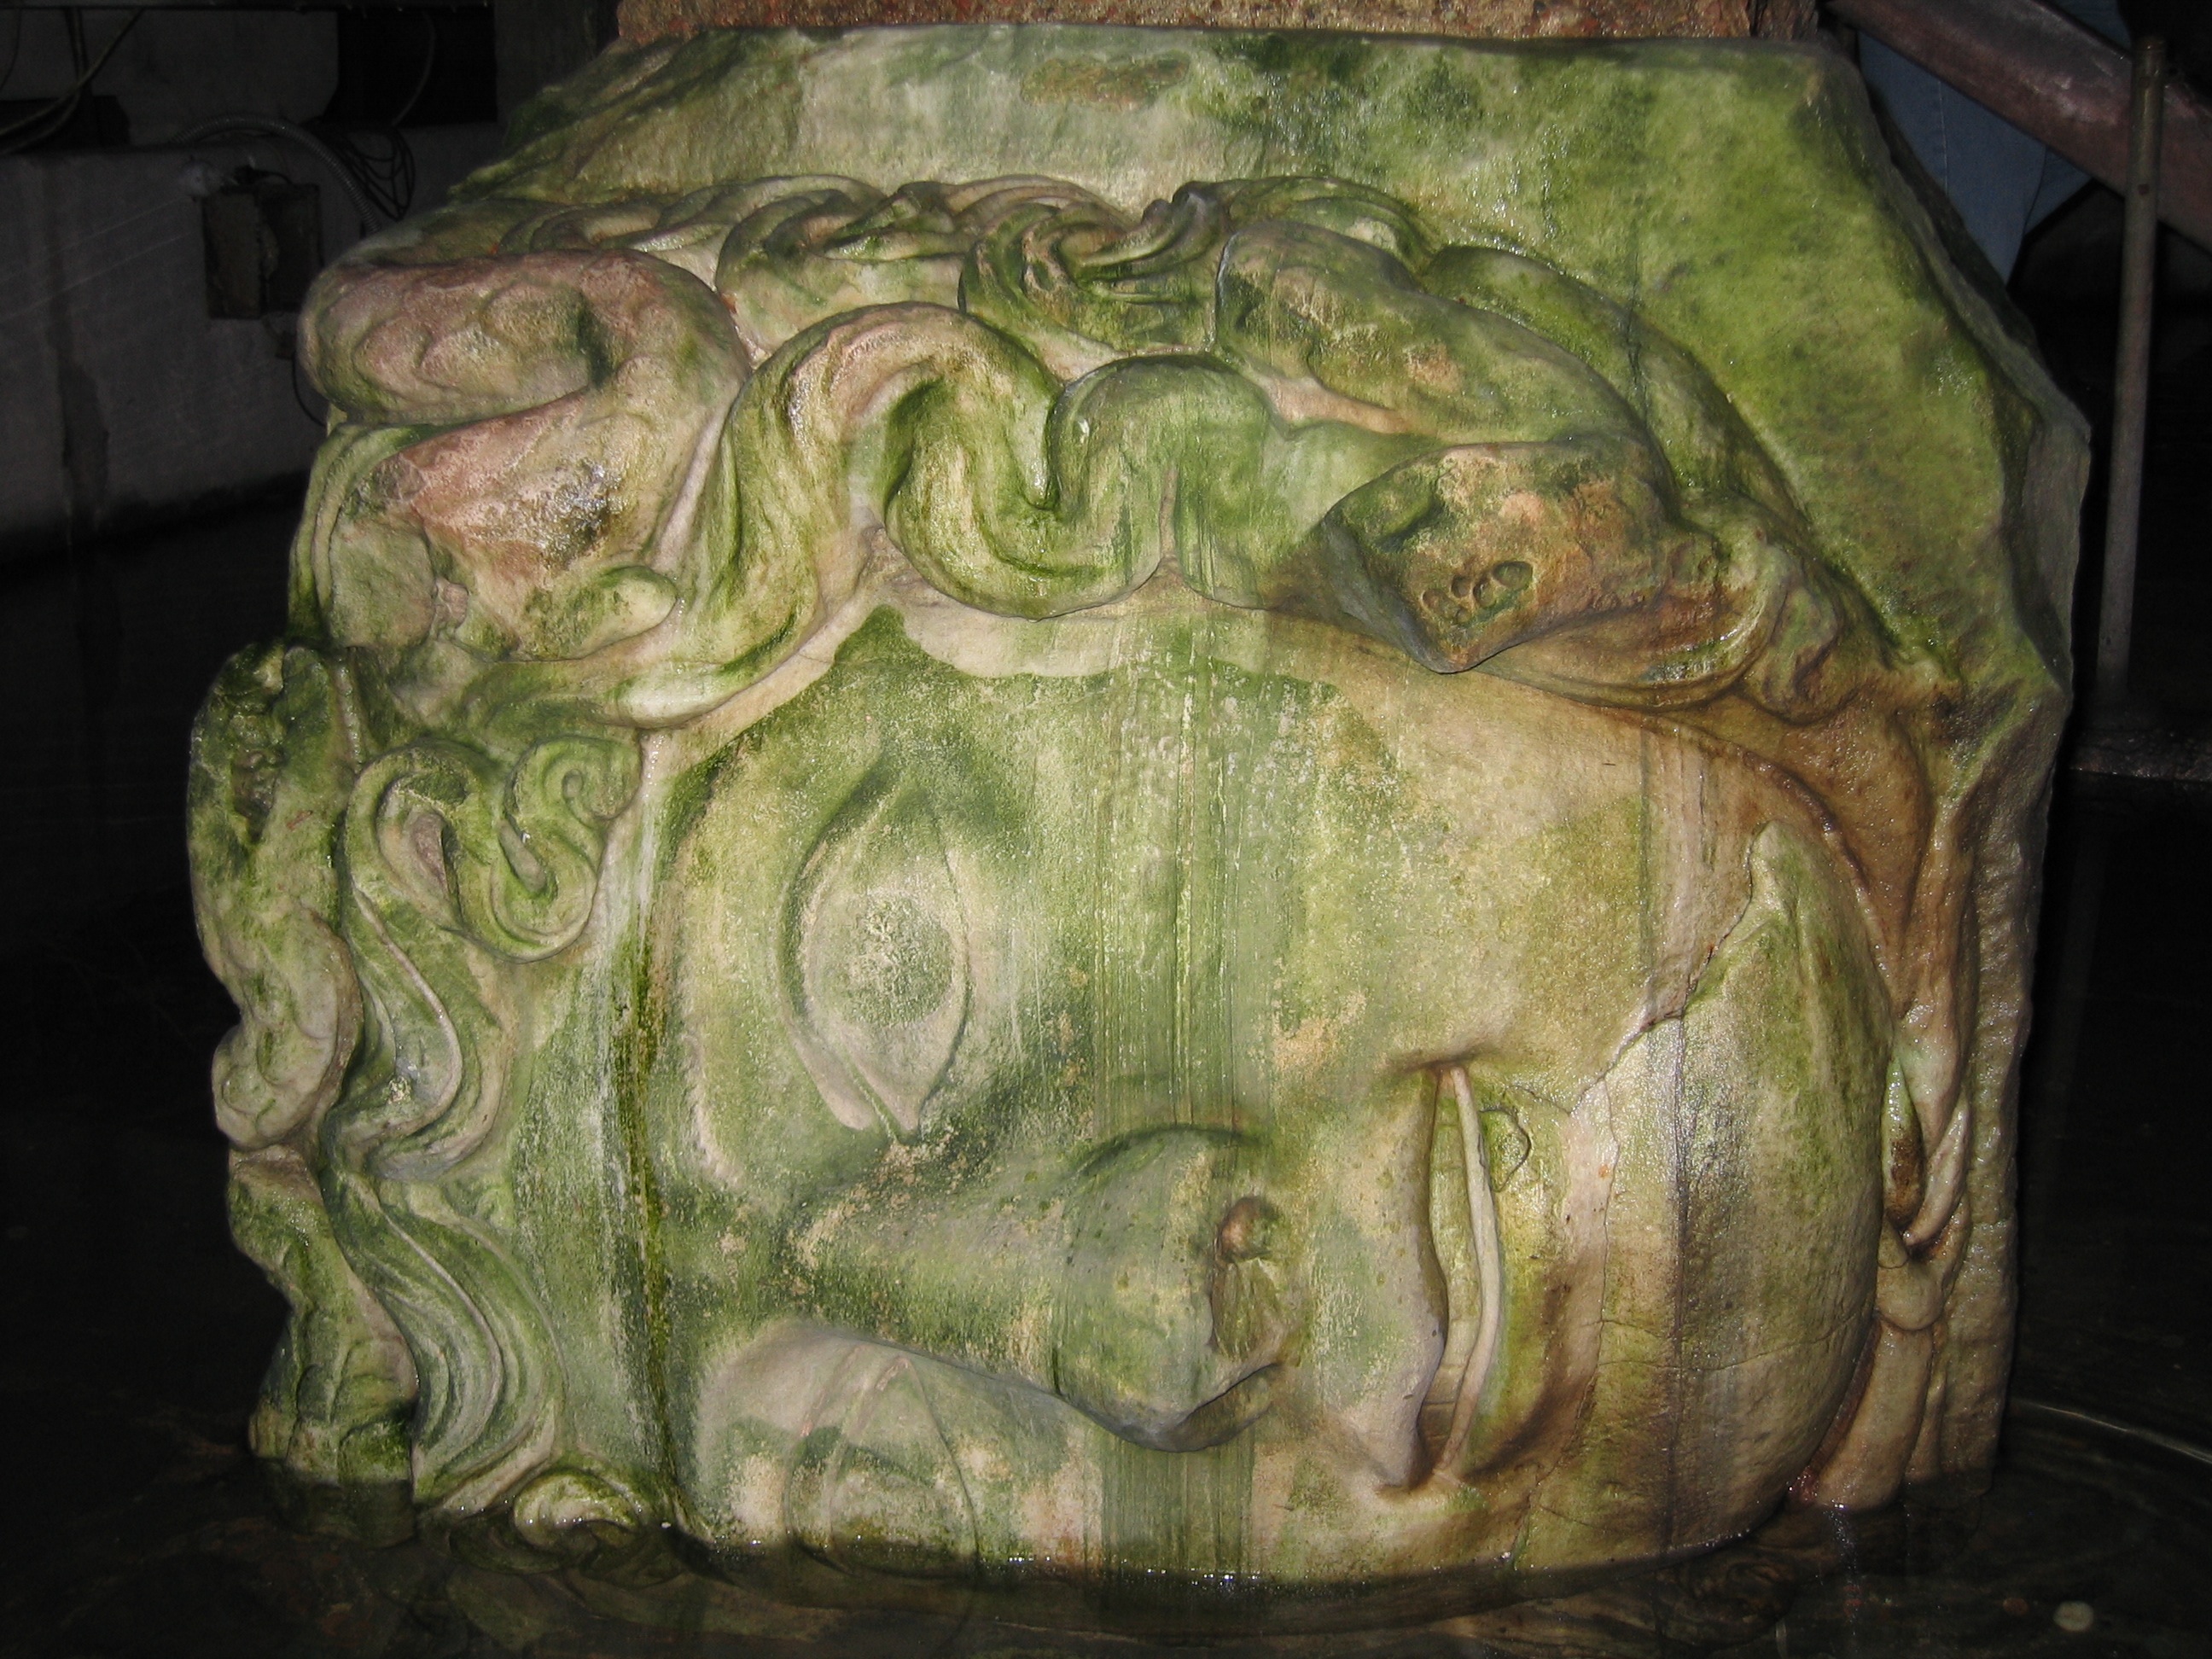 Medusa head, Basilica Cistern, Istanbul